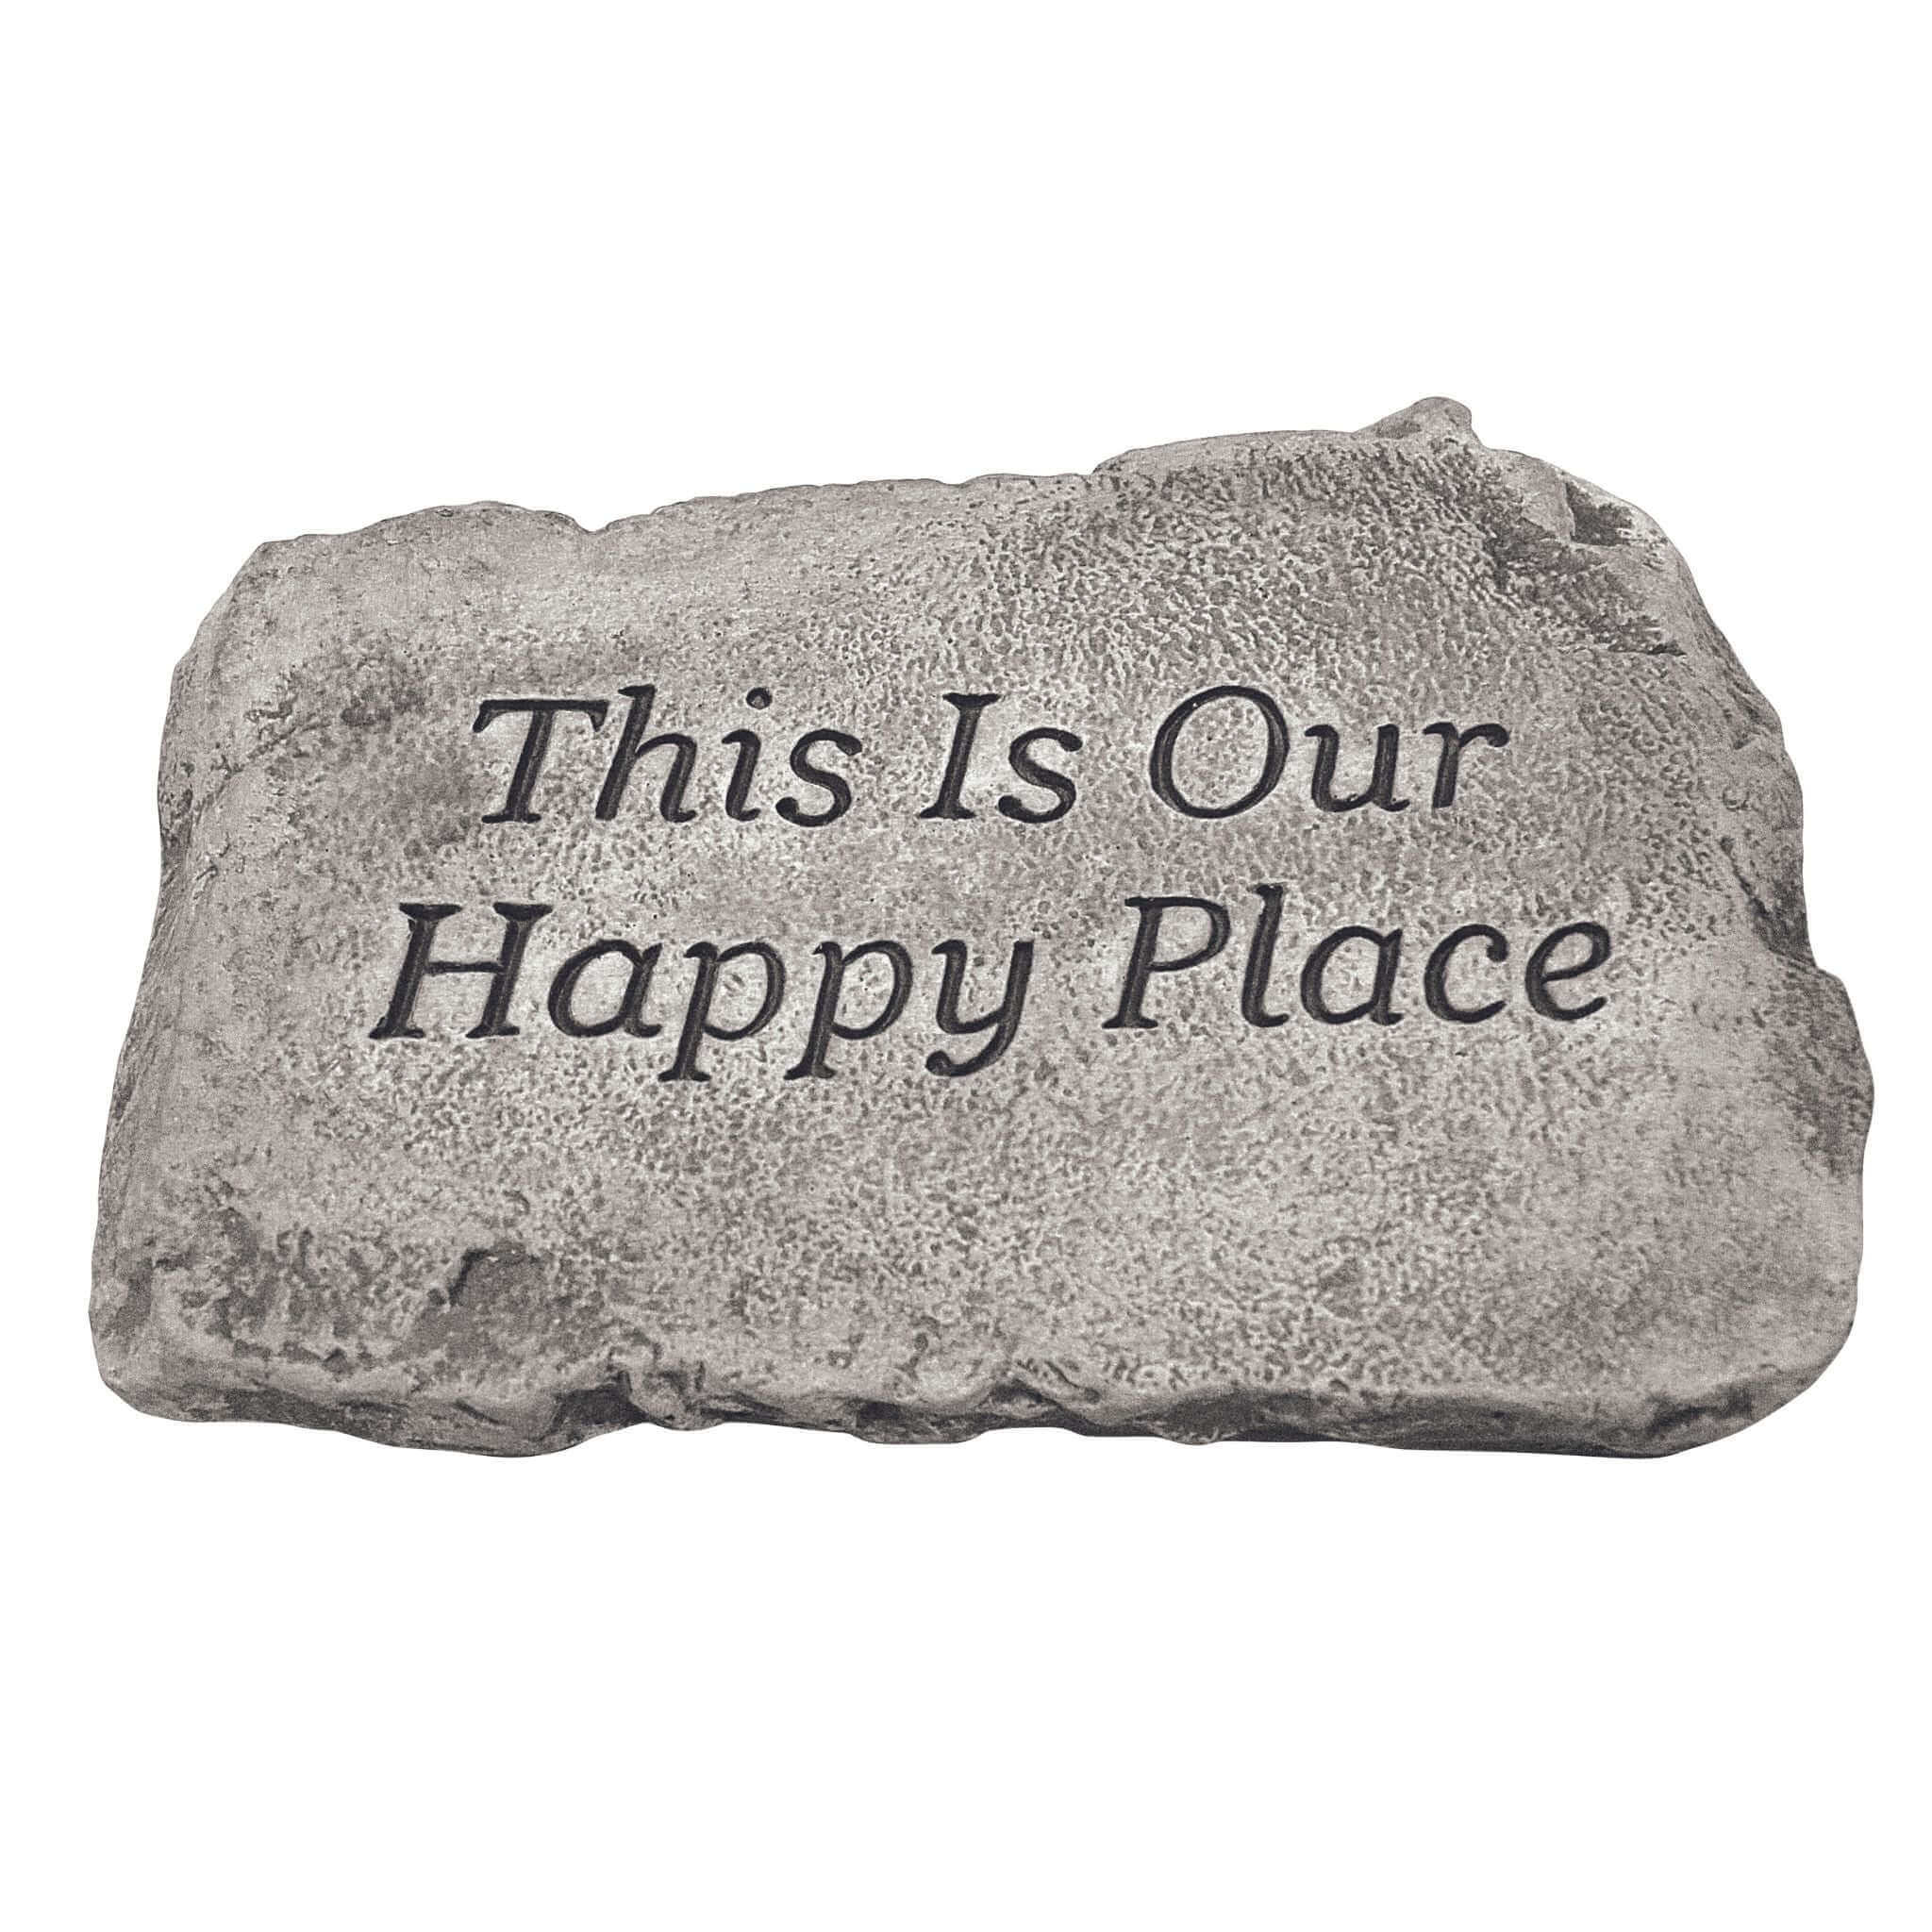 Our Happy Place Concrete Garden Greeting Stone - Massarellis #1805